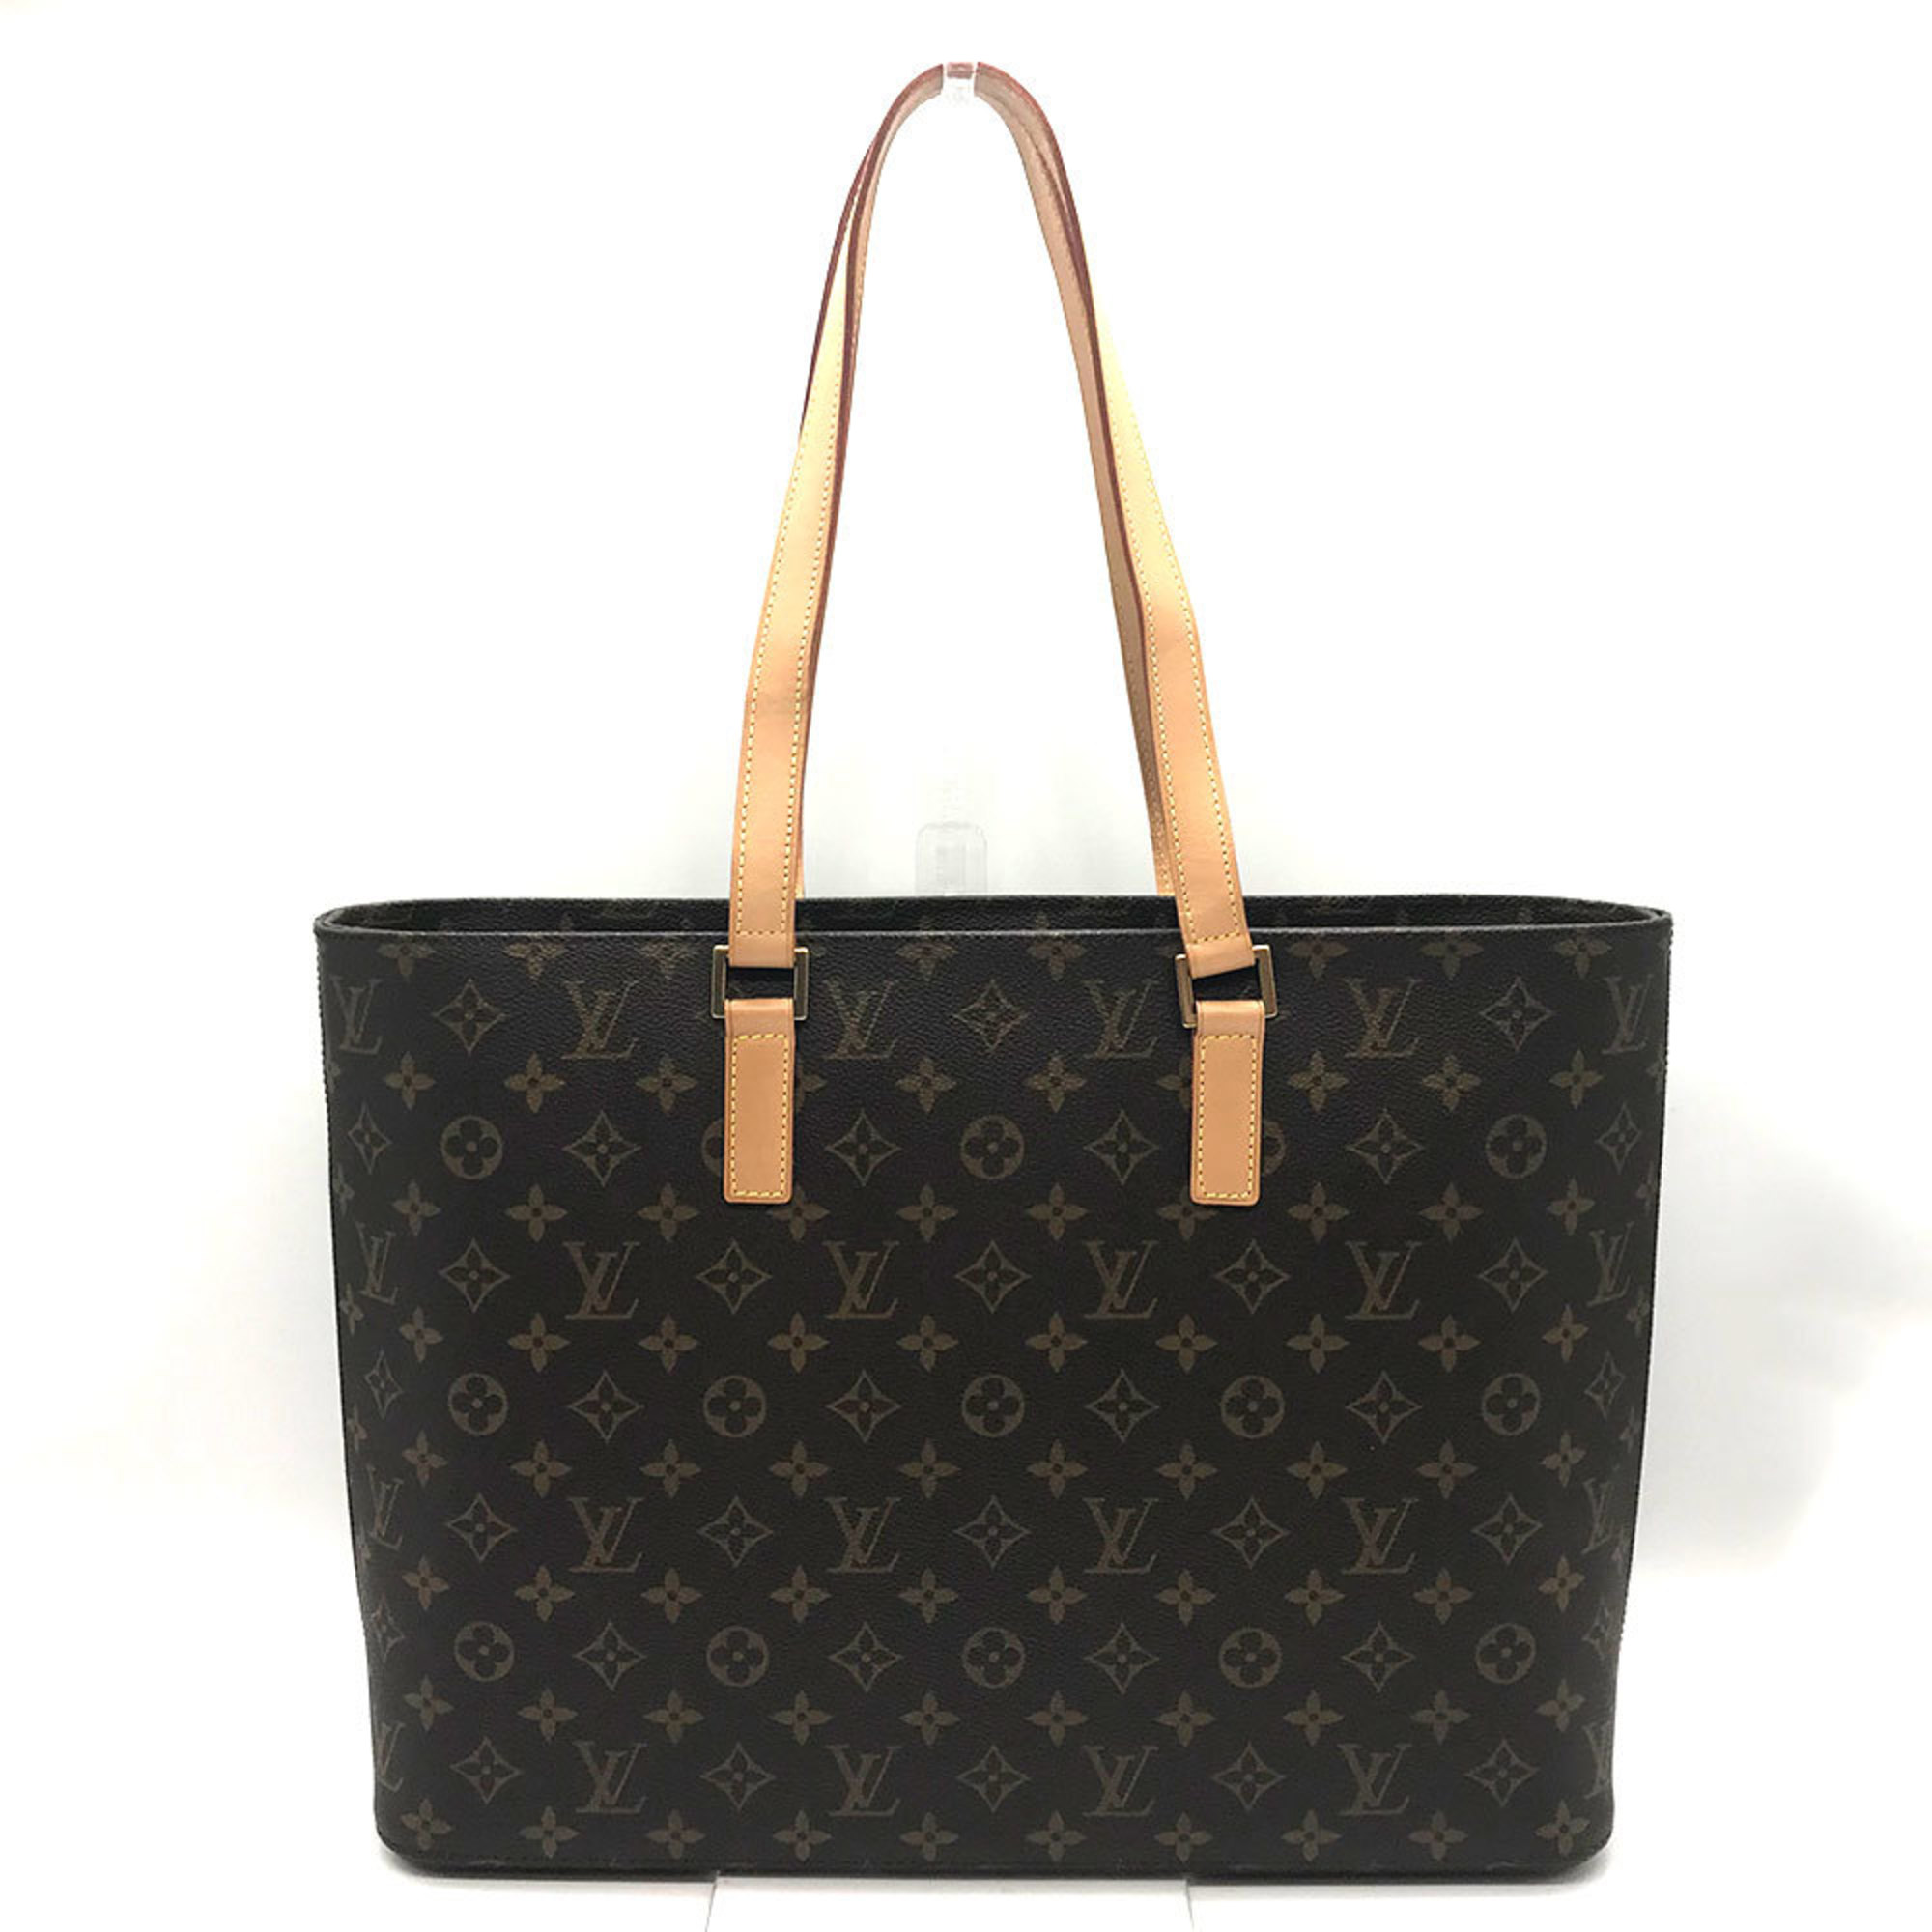 Louis Vuitton Tote Bag Luco S Monogram PVC M51155 Women's